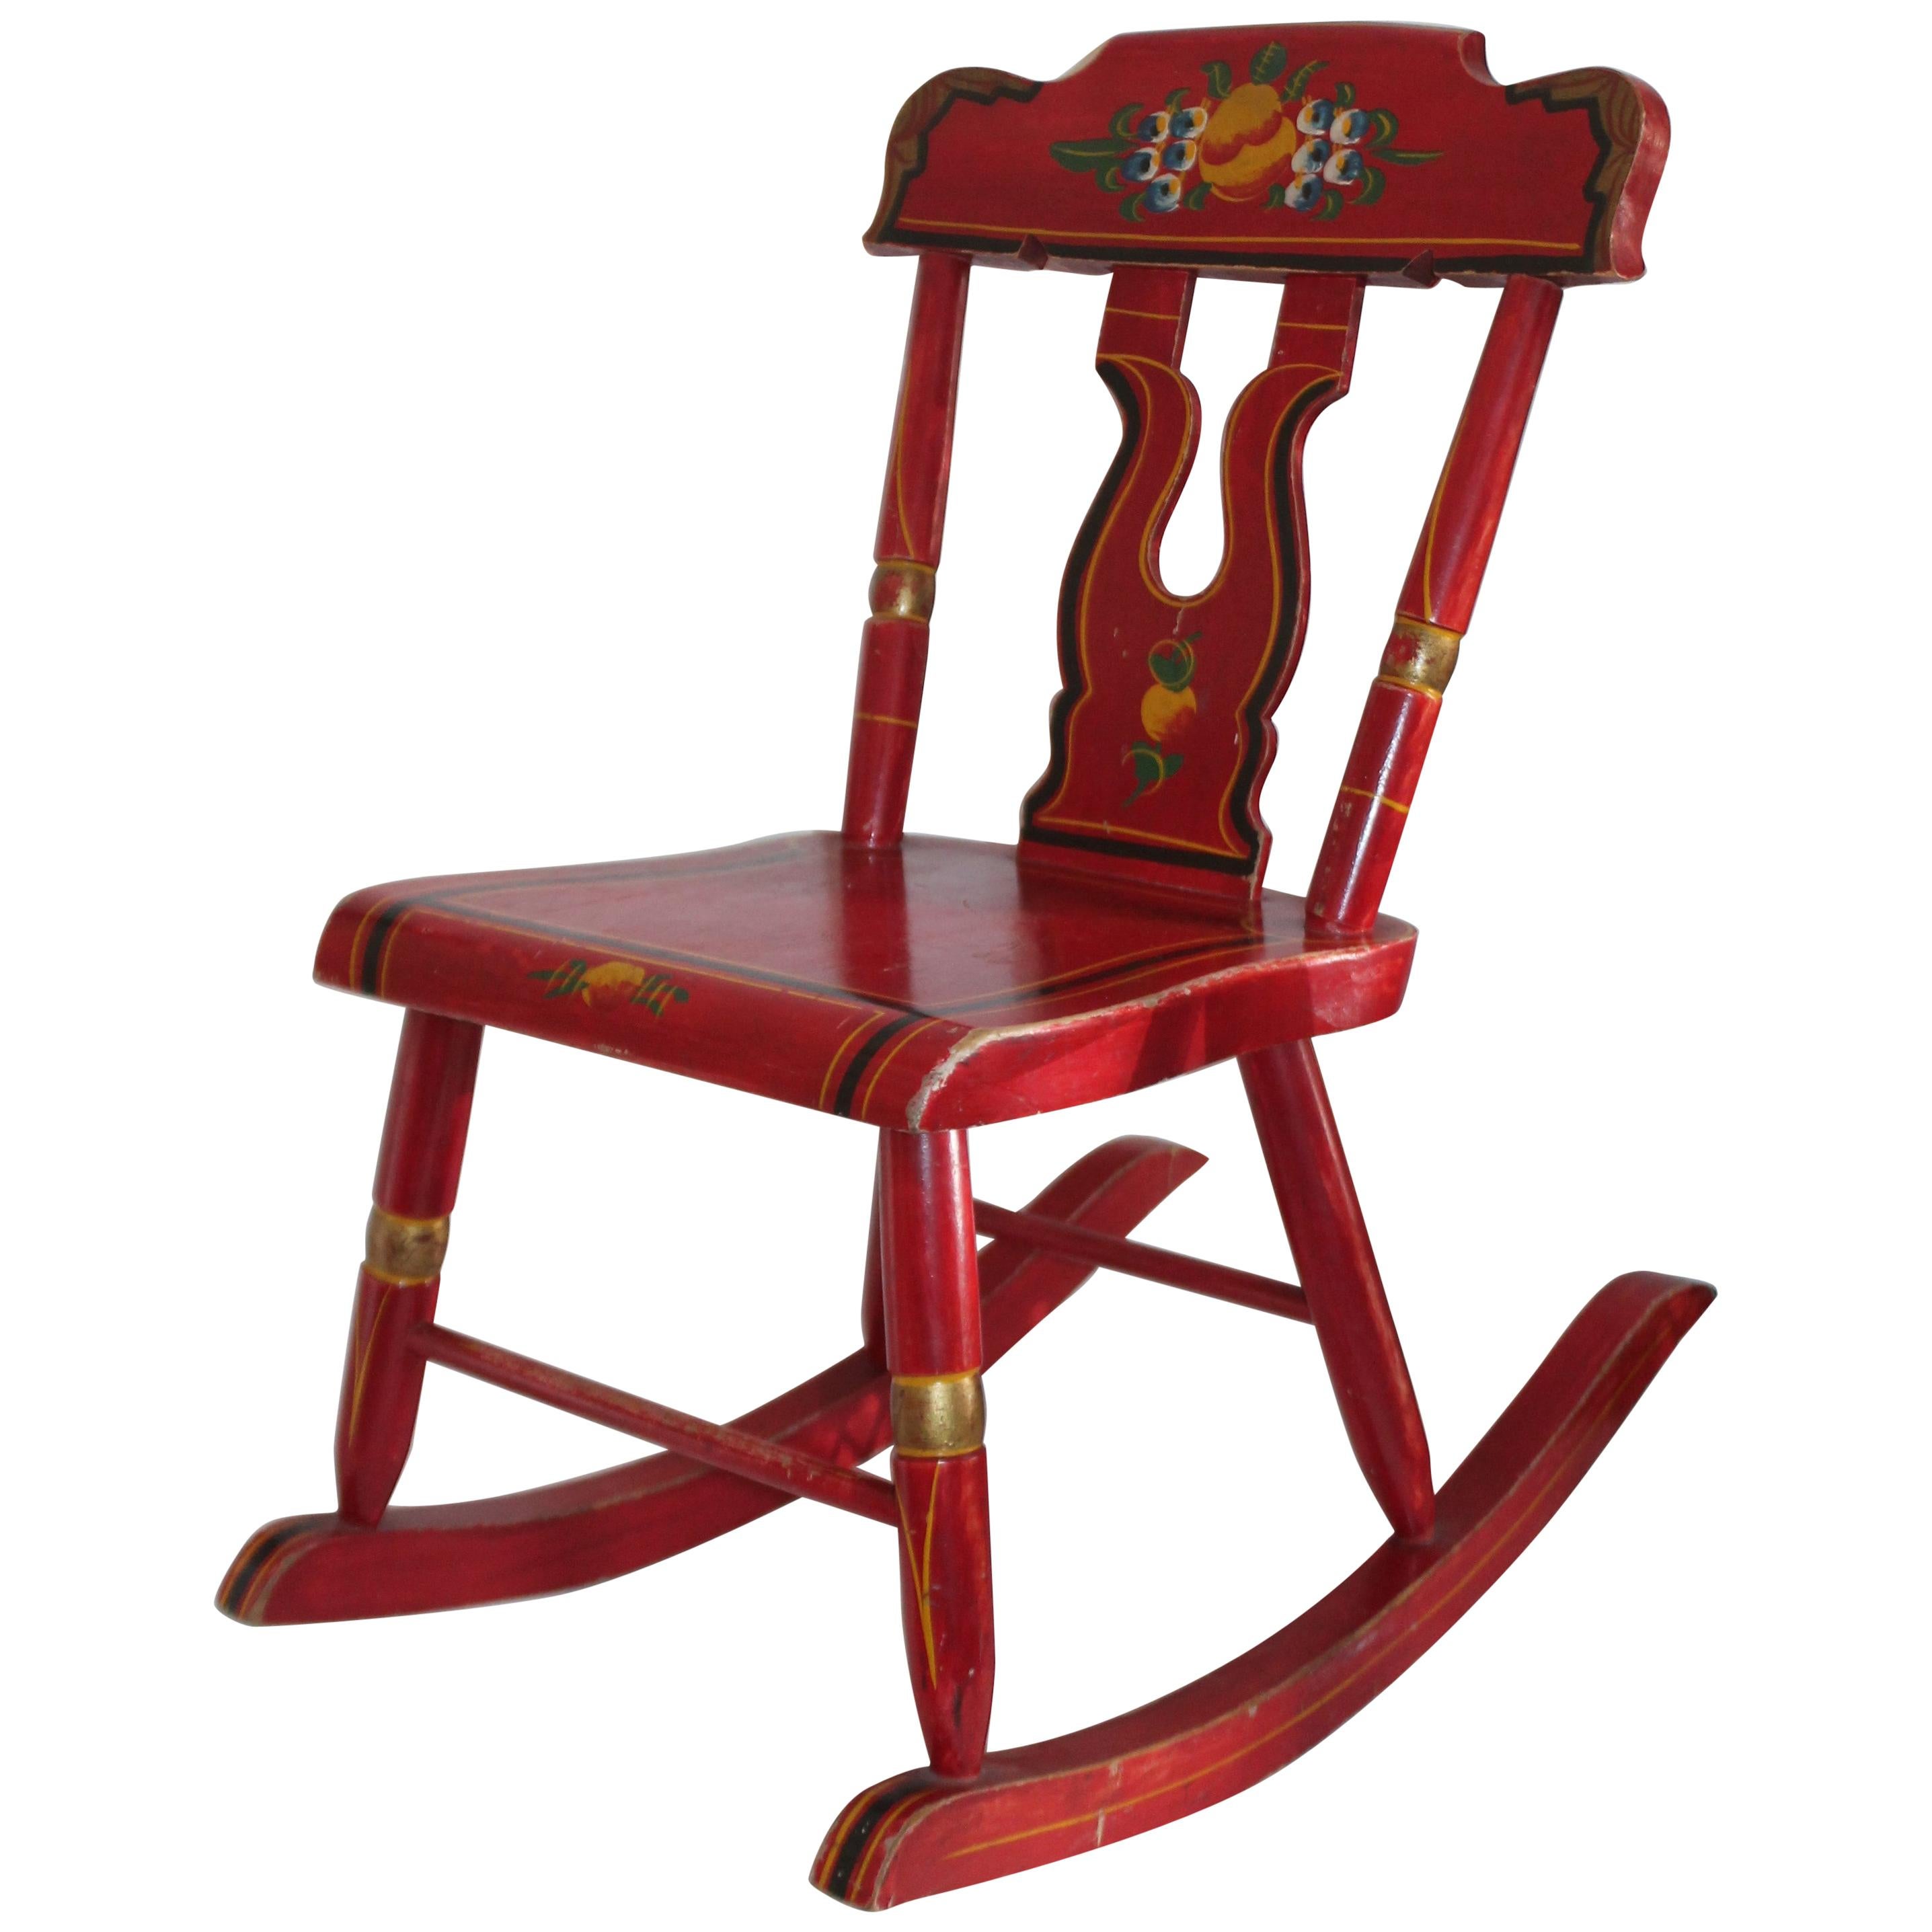 Pennsylvania Original Red Painted Children's Rocking Chair